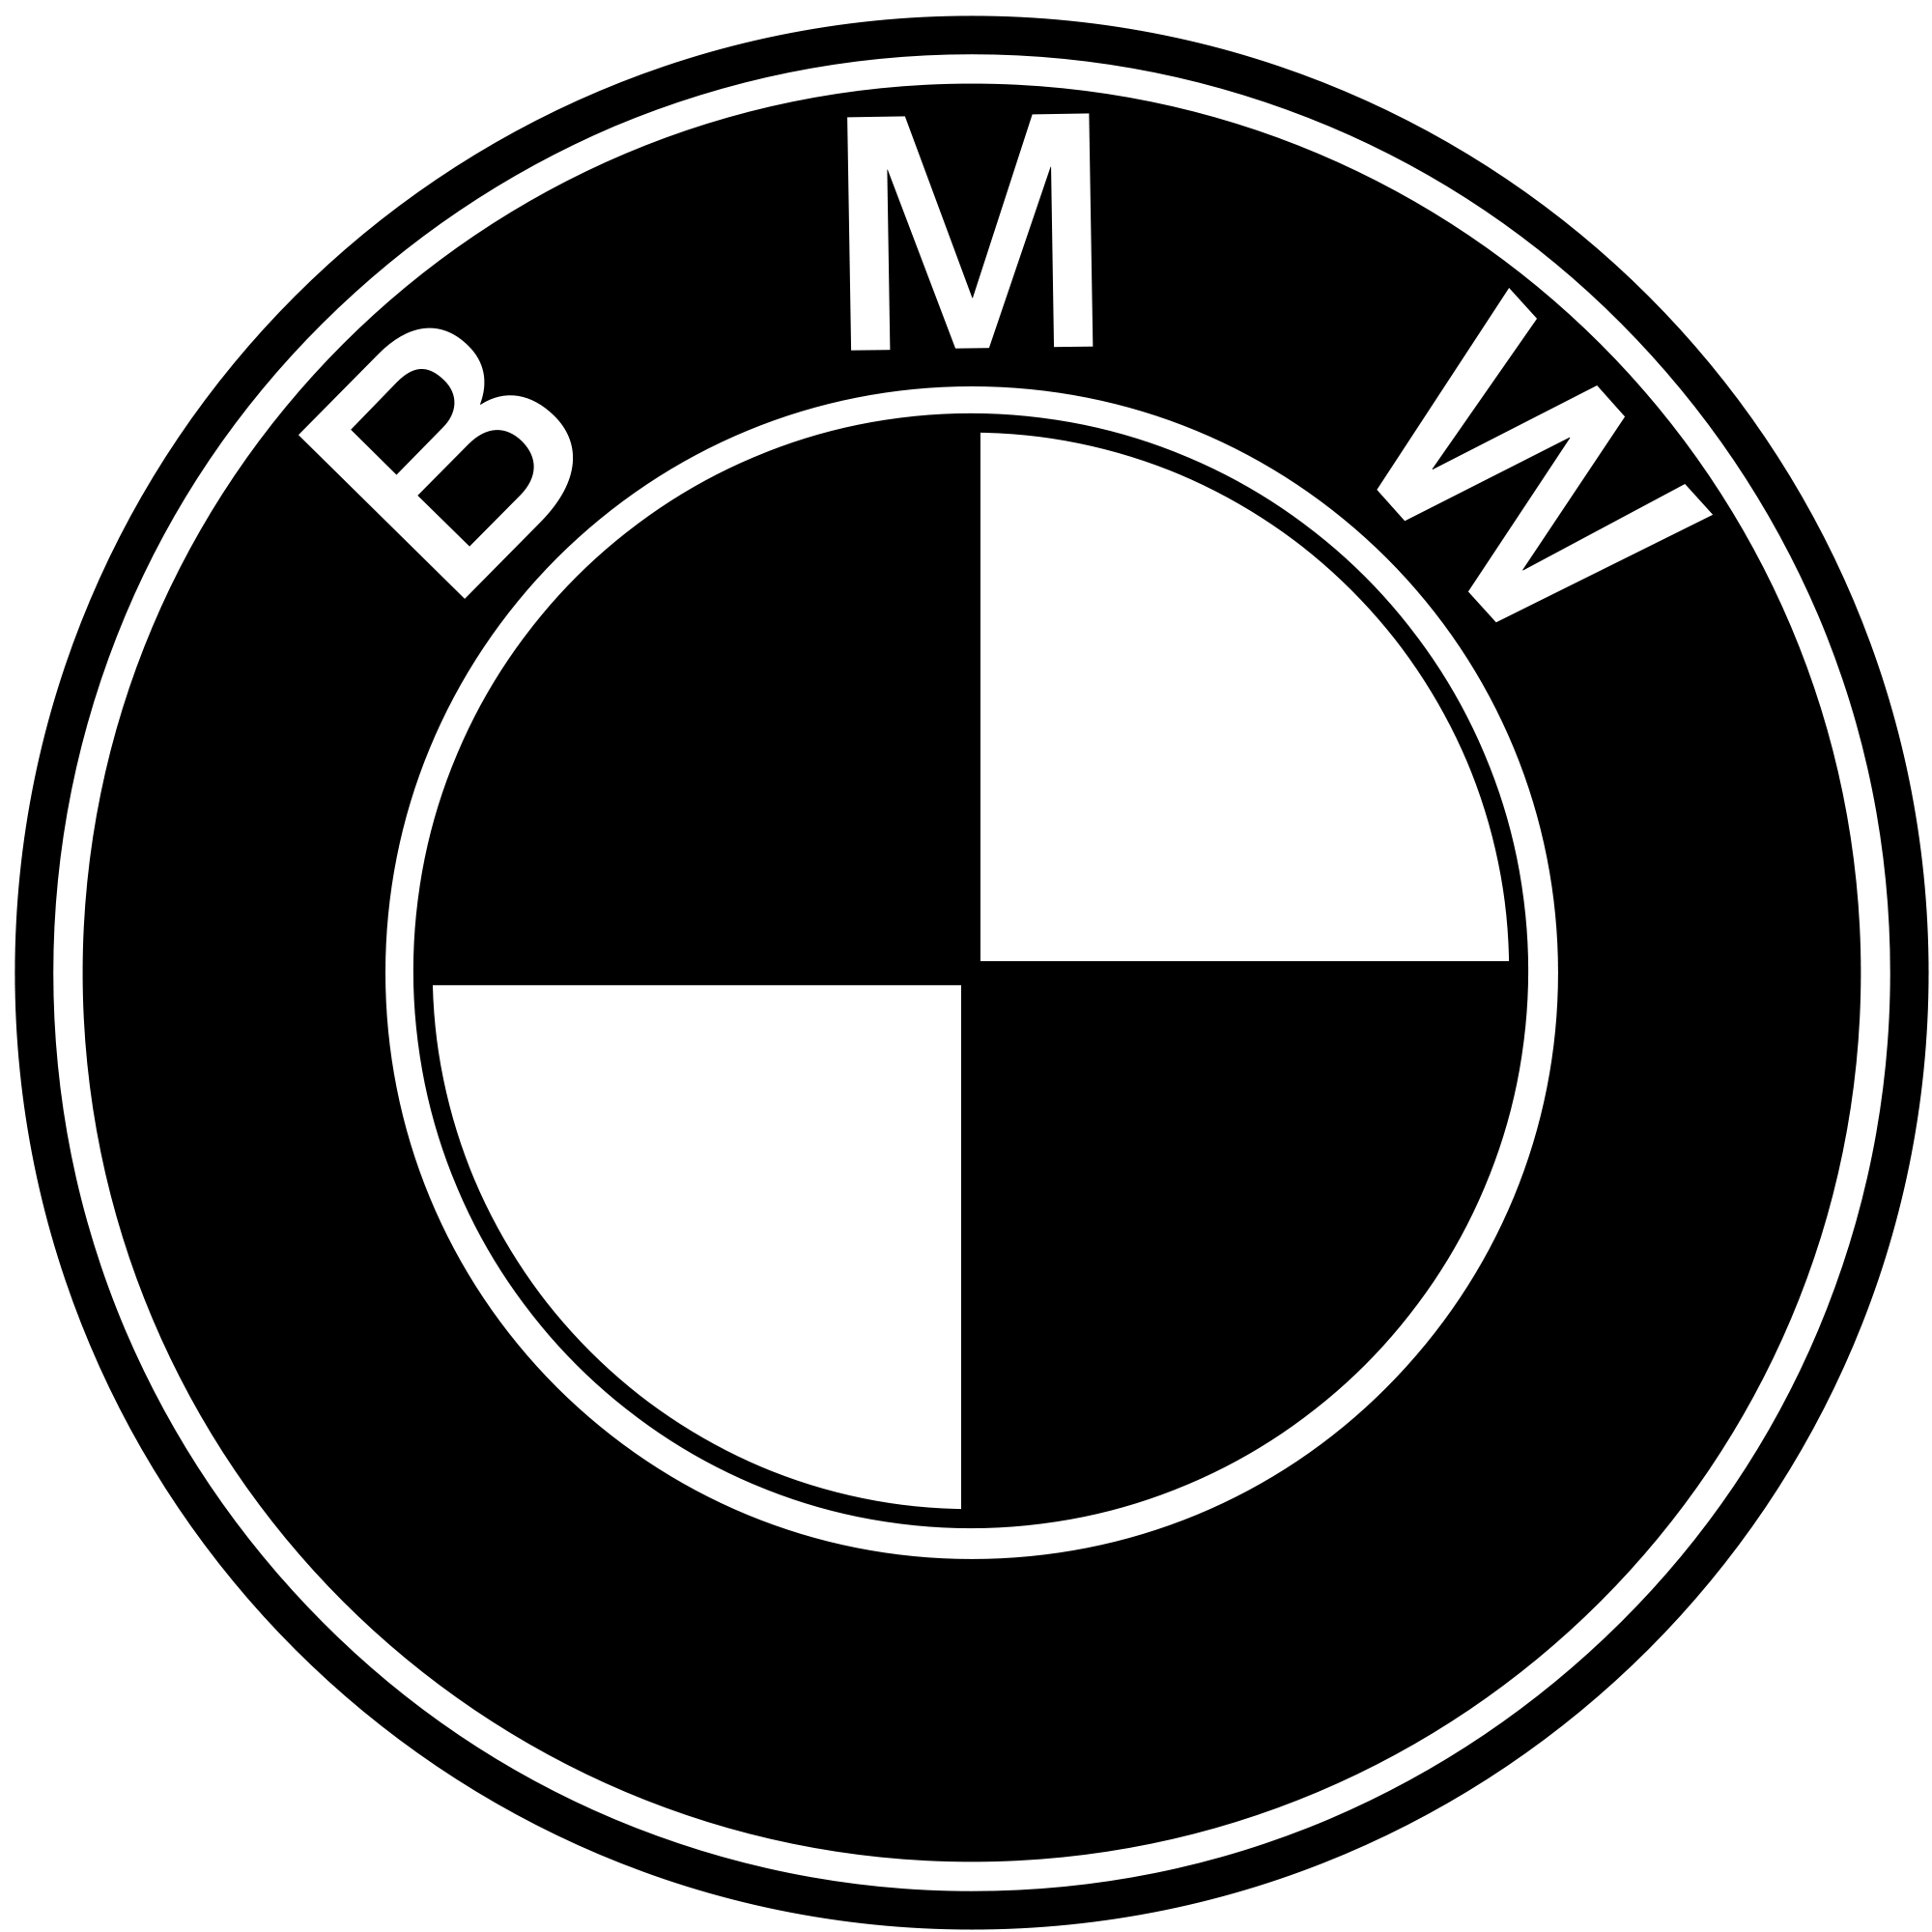 Bmw Brands Logo Image Free Transparent Png Logos Images And